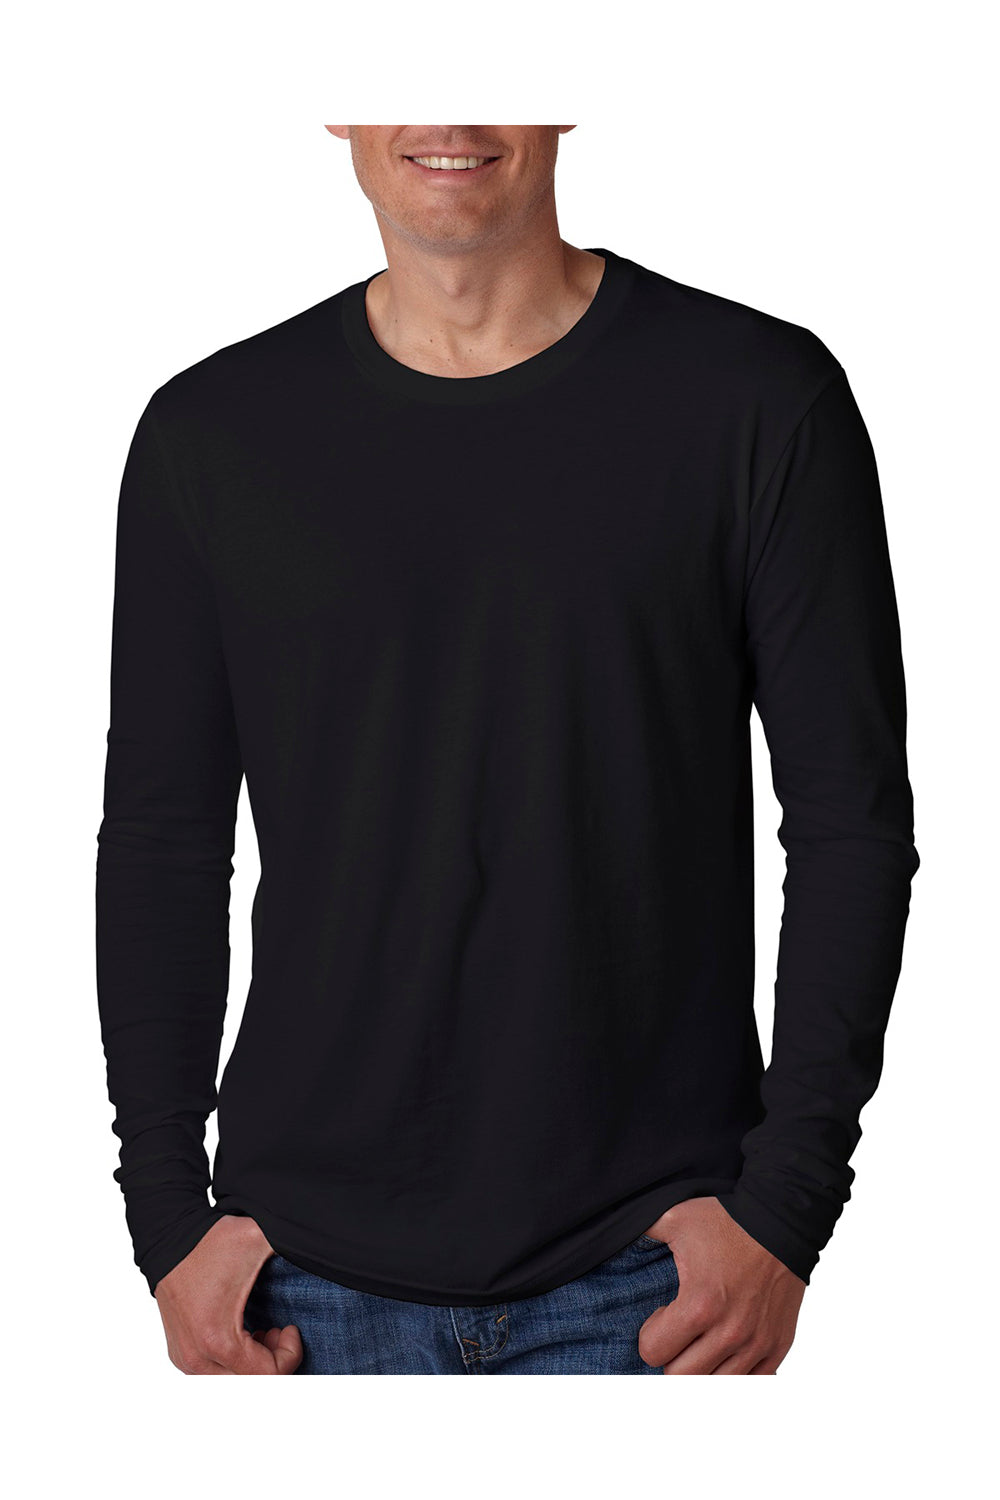 Next Level N3601 Mens Fine Jersey Long Sleeve Crewneck T-Shirt Black Front